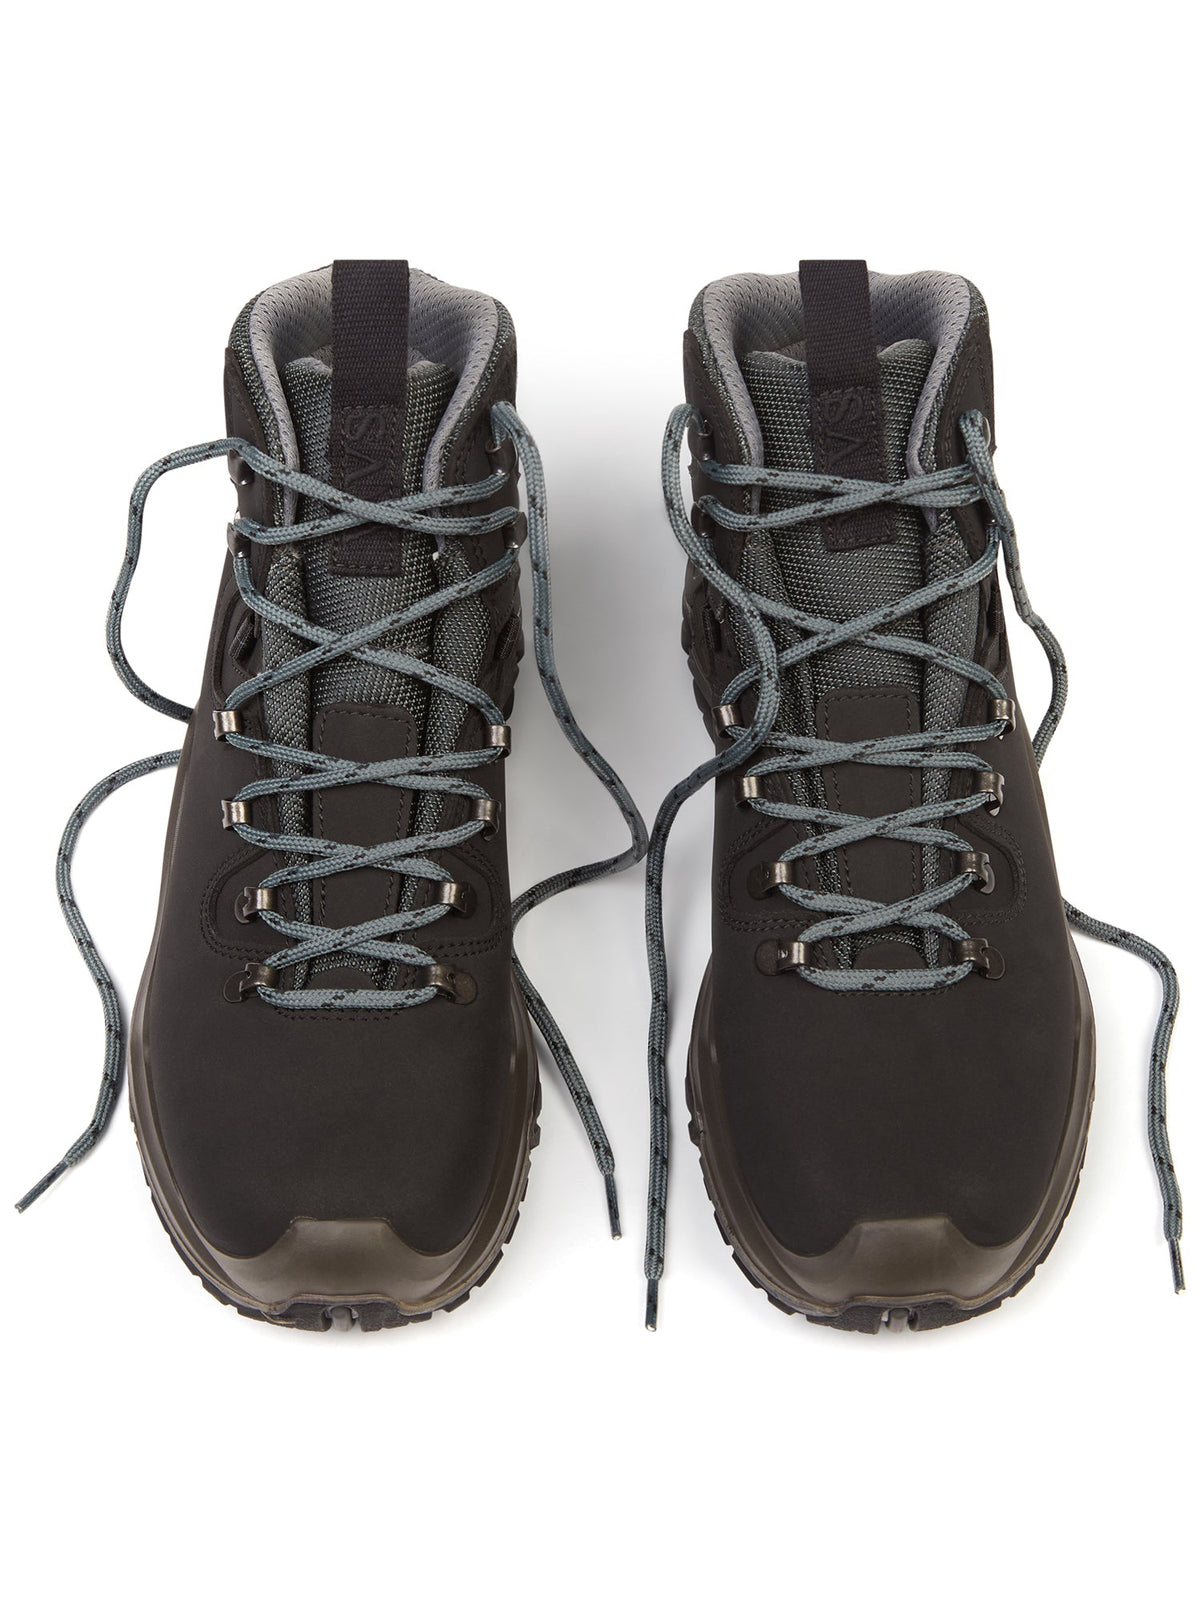 WVSport Insulated Waterproof Hiking Boots